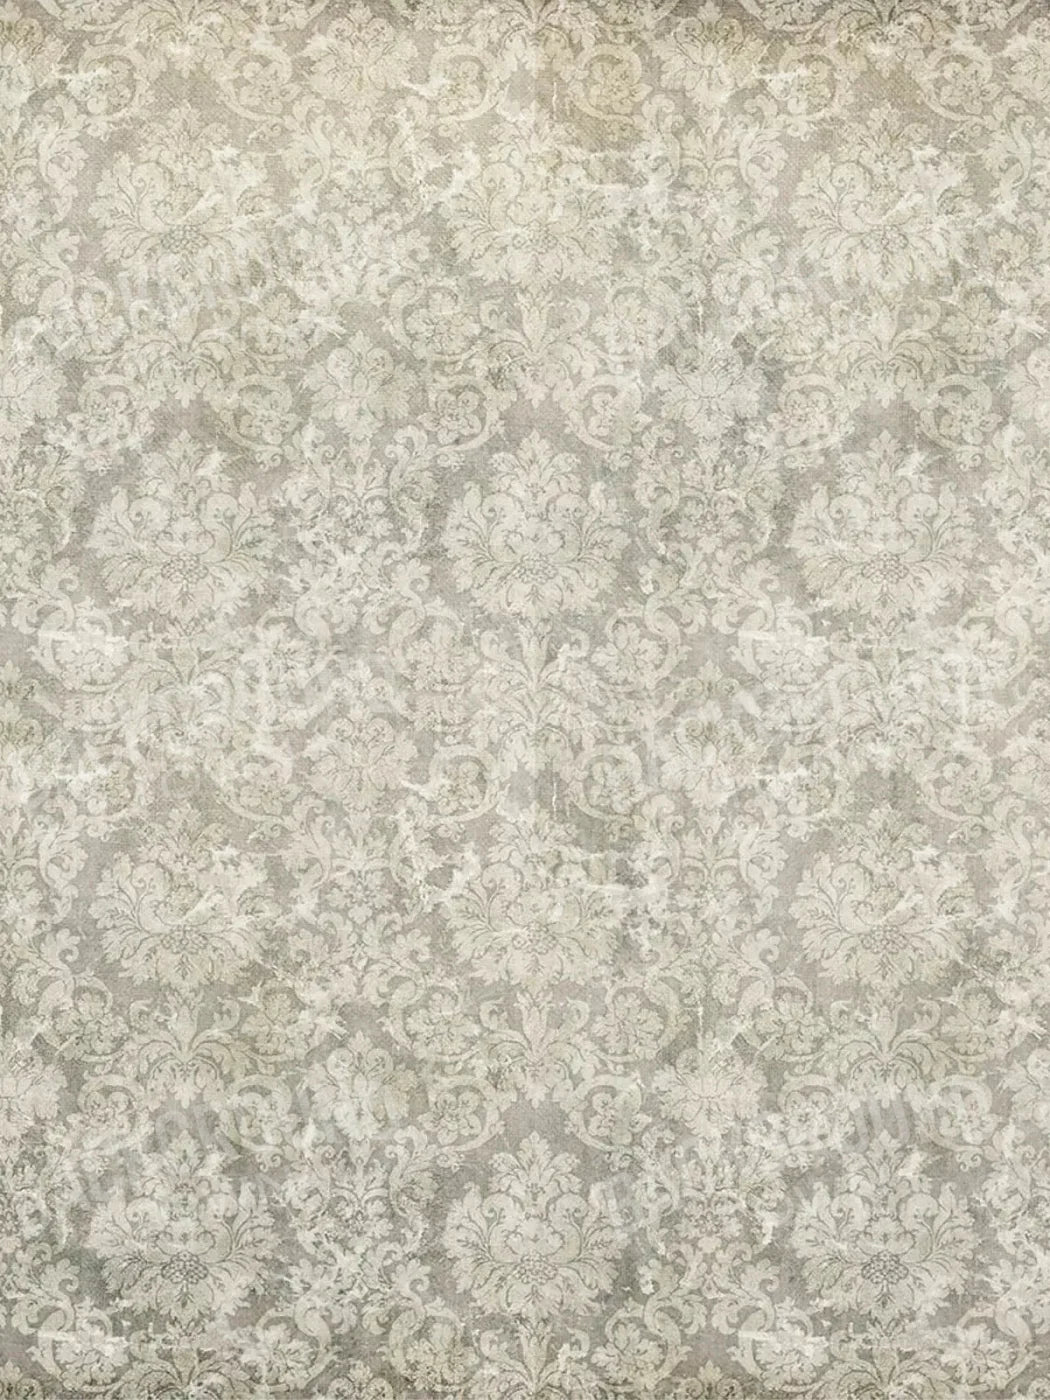 Damask Lace 5X68 Fleece ( 60 X 80 Inch ) Backdrop